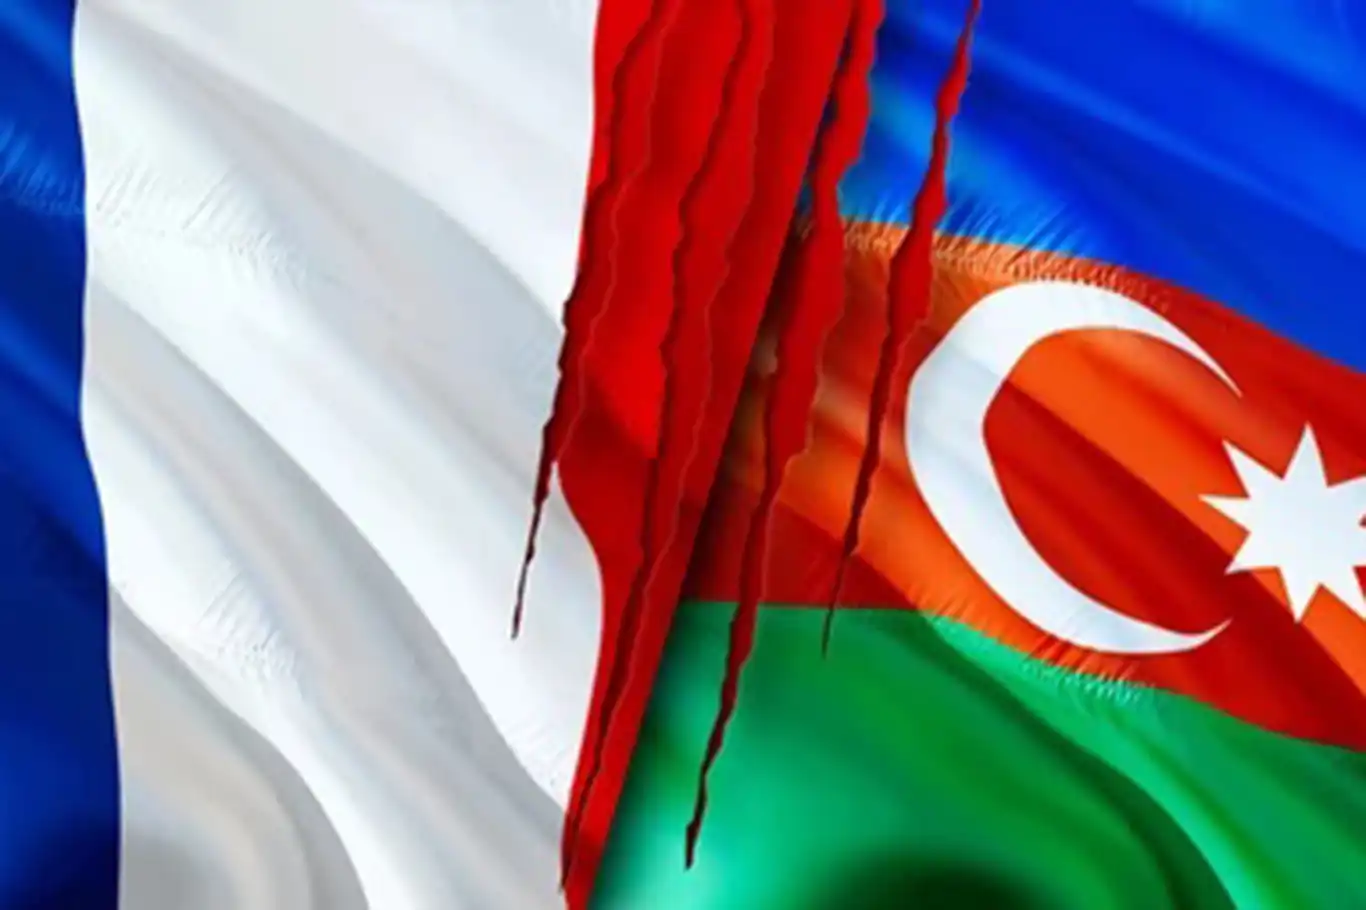 Diplomatic tensions escalate as France and Azerbaijan expel diplomats in reciprocal measures